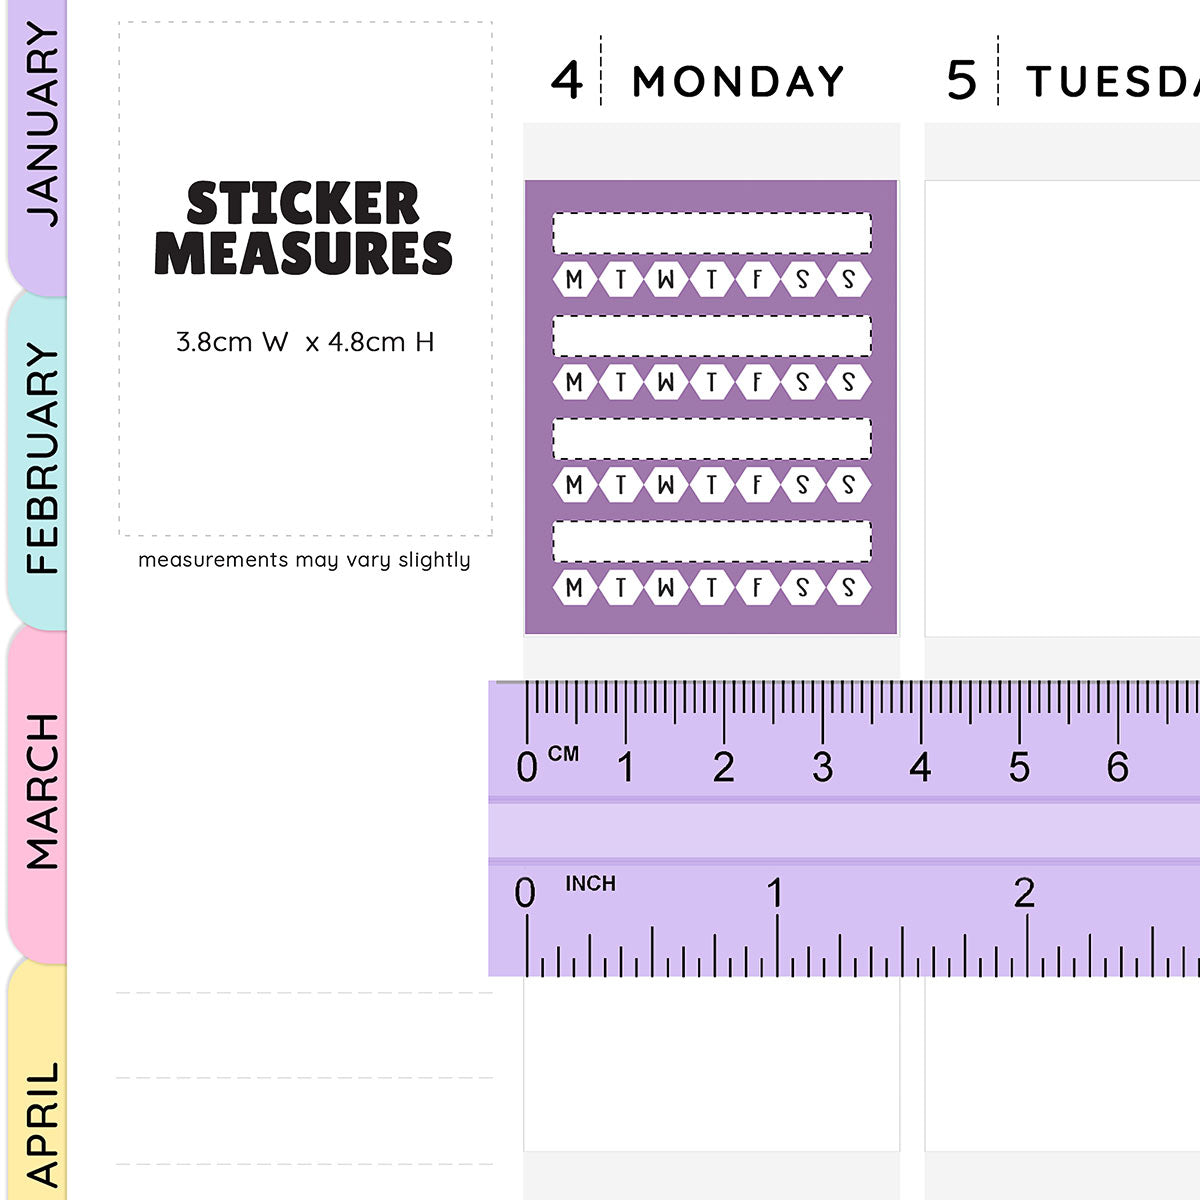 Habit tracker sidebar printable , Weekly habit tracker, Habit planner  stickers